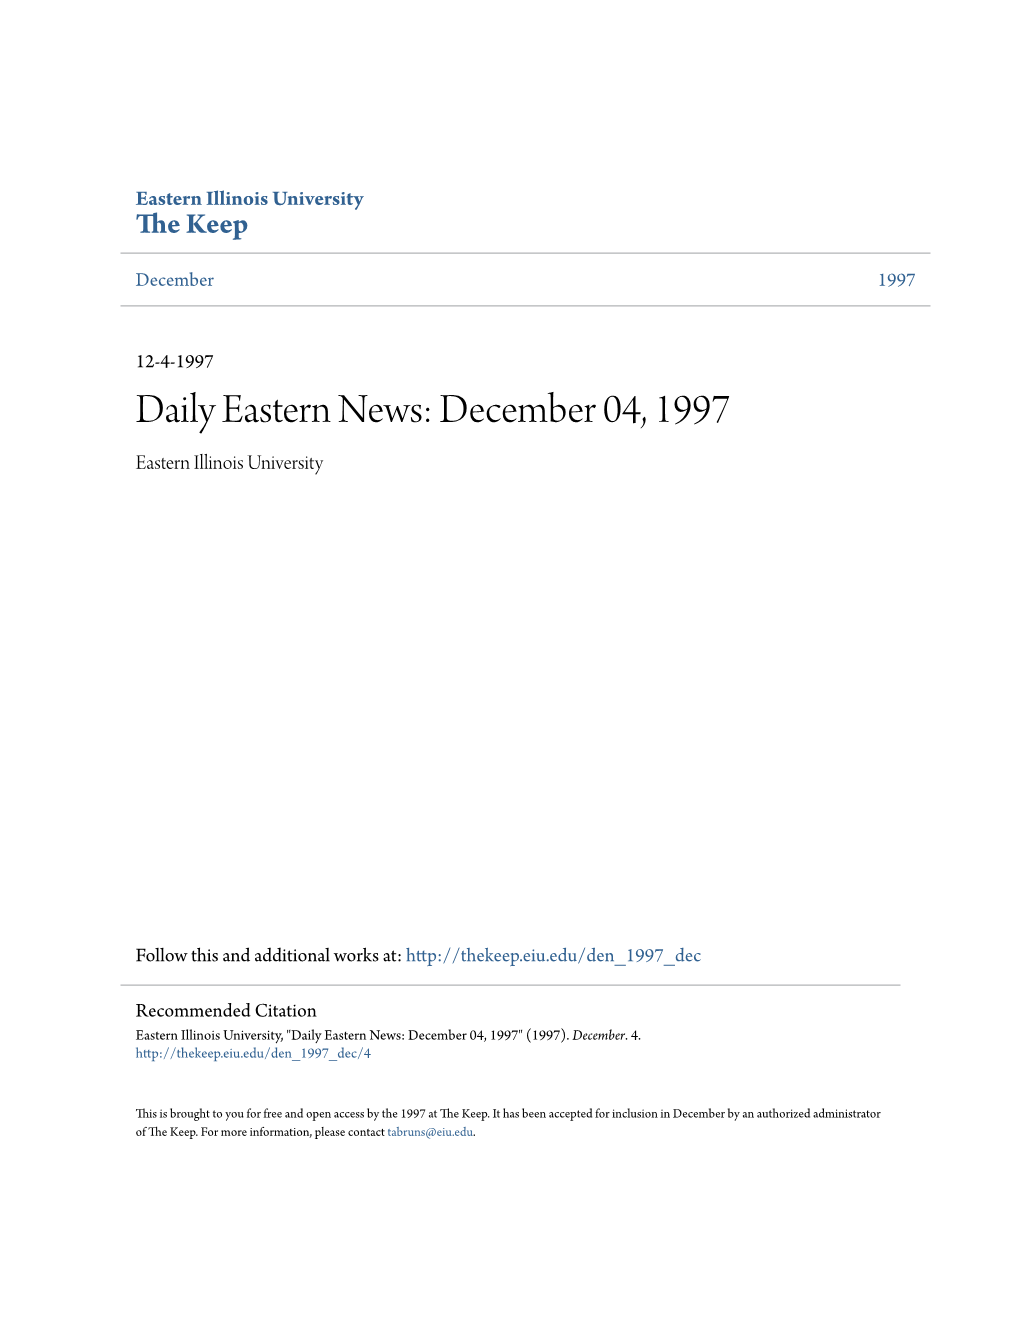 Daily Eastern News: December 04, 1997 Eastern Illinois University